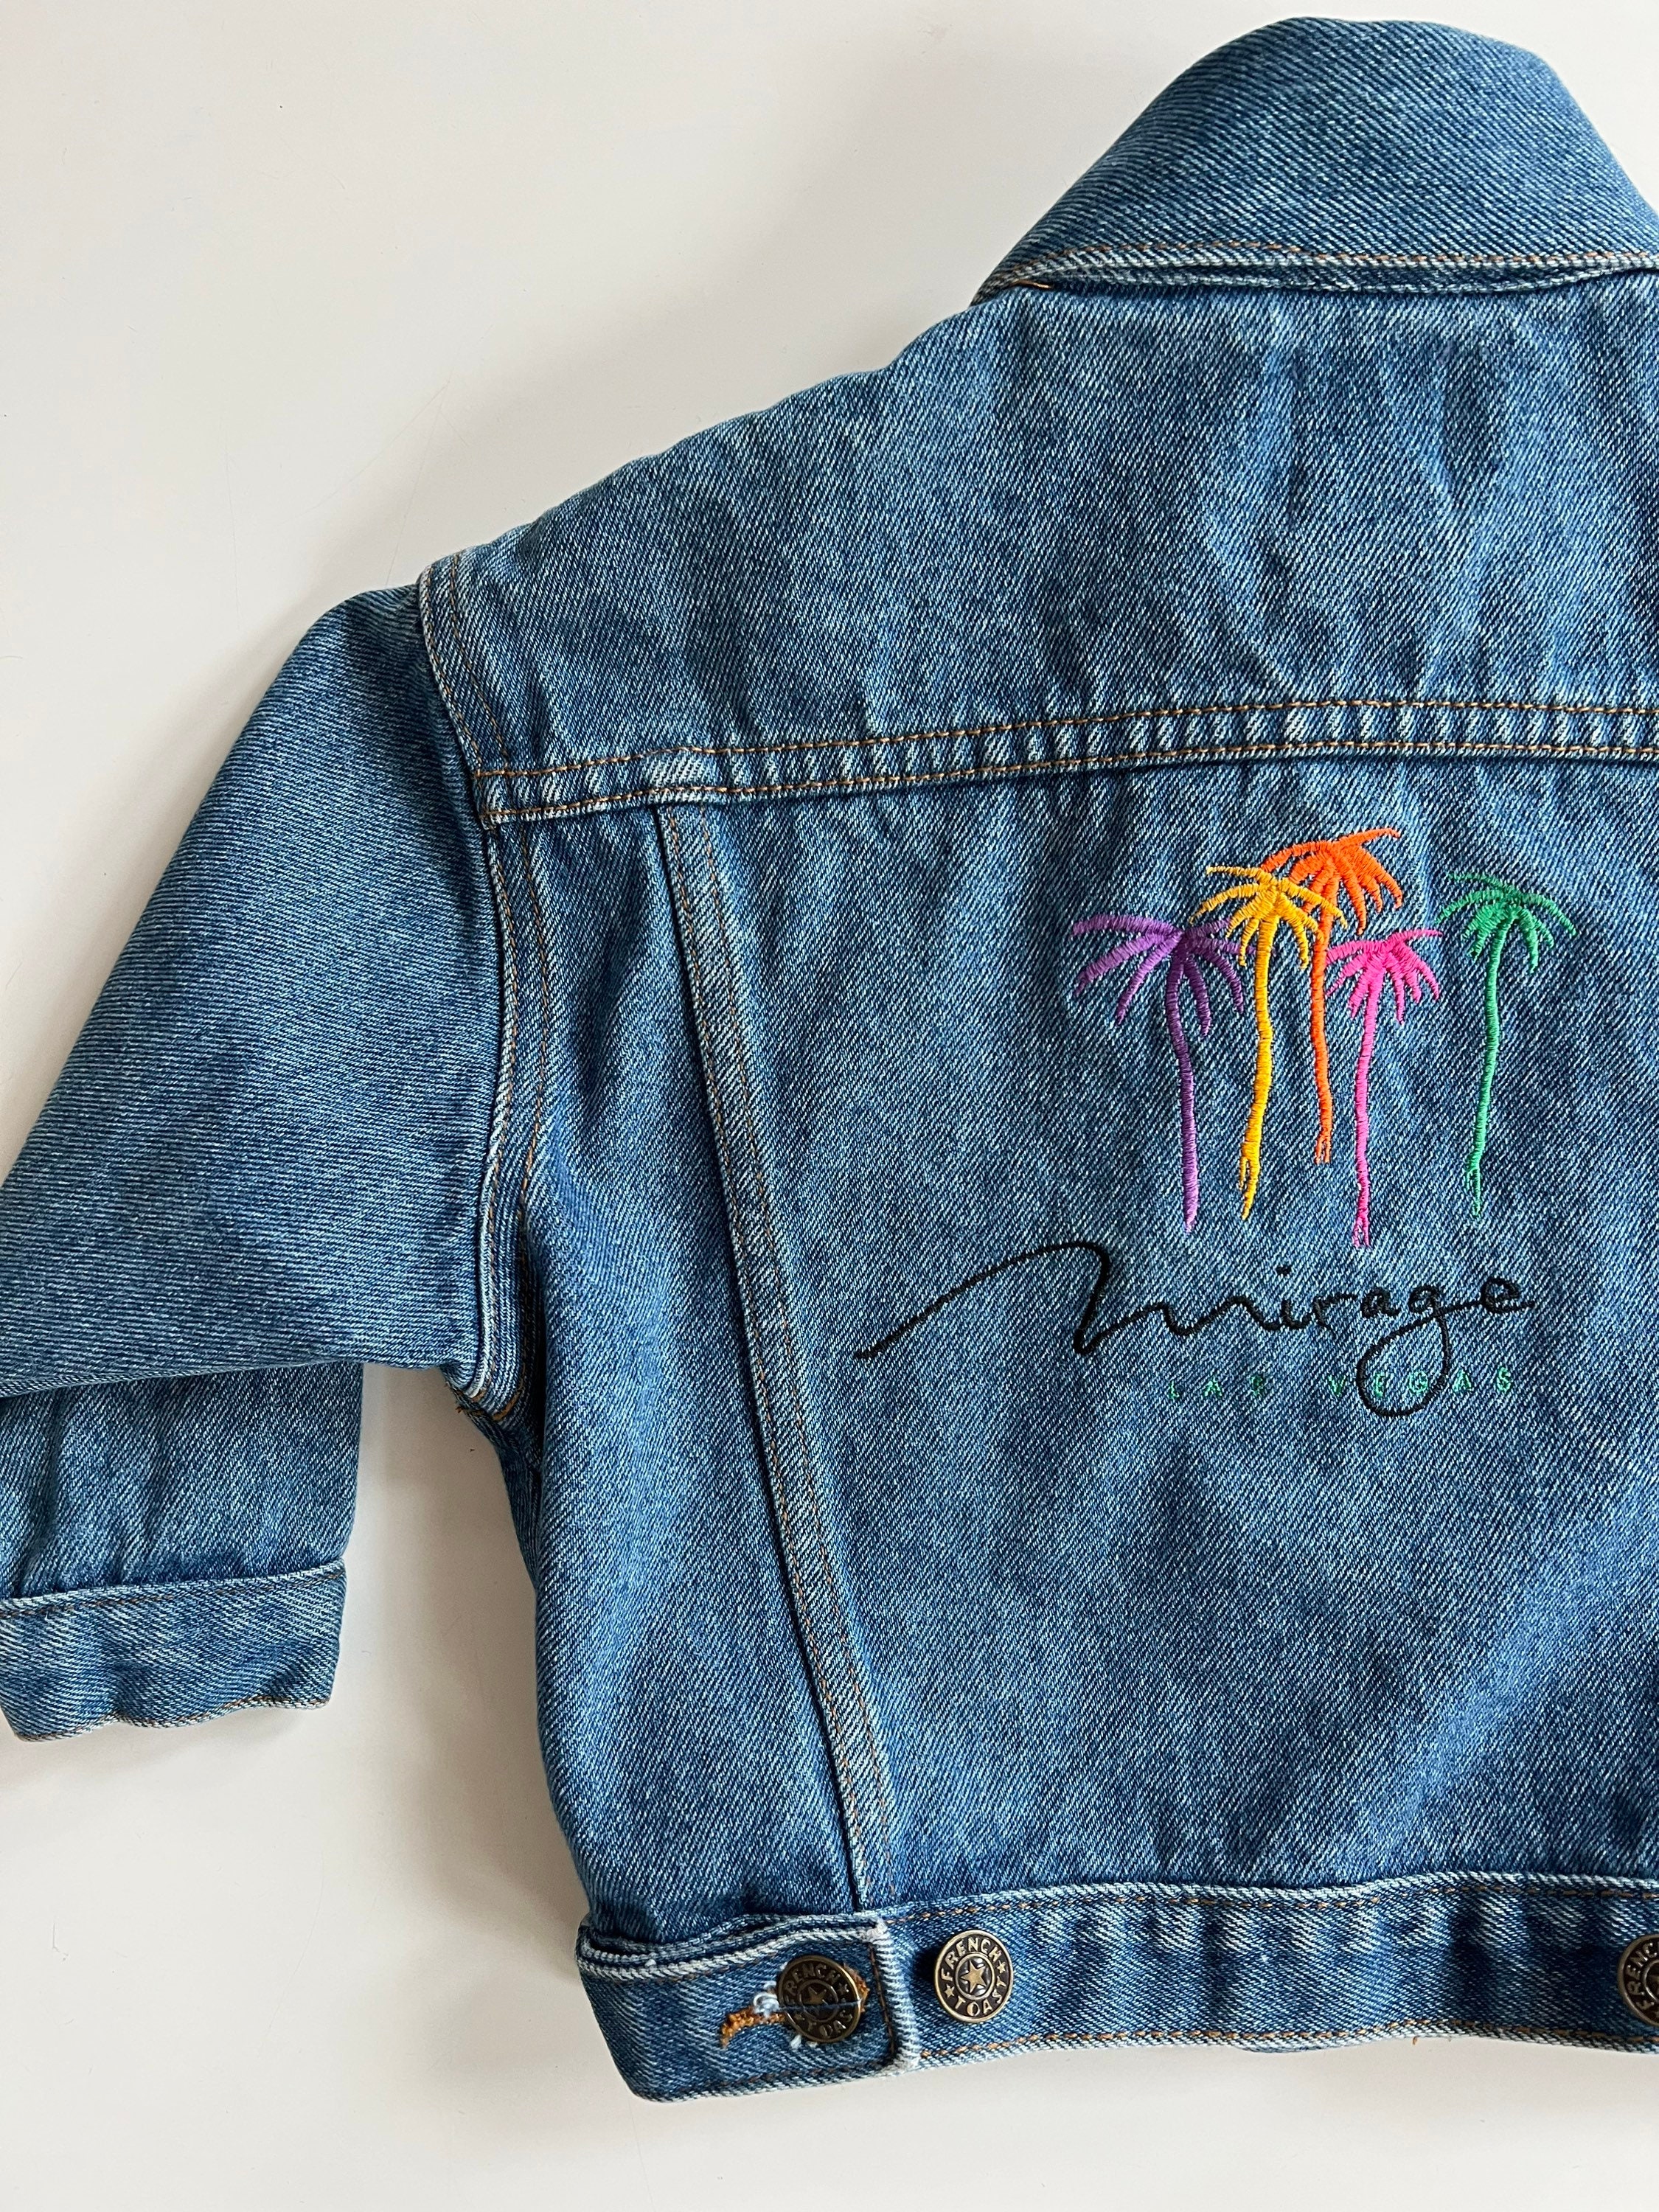 Vintage Denim Jacket With Mirage Las Vegas Embroidery on Back